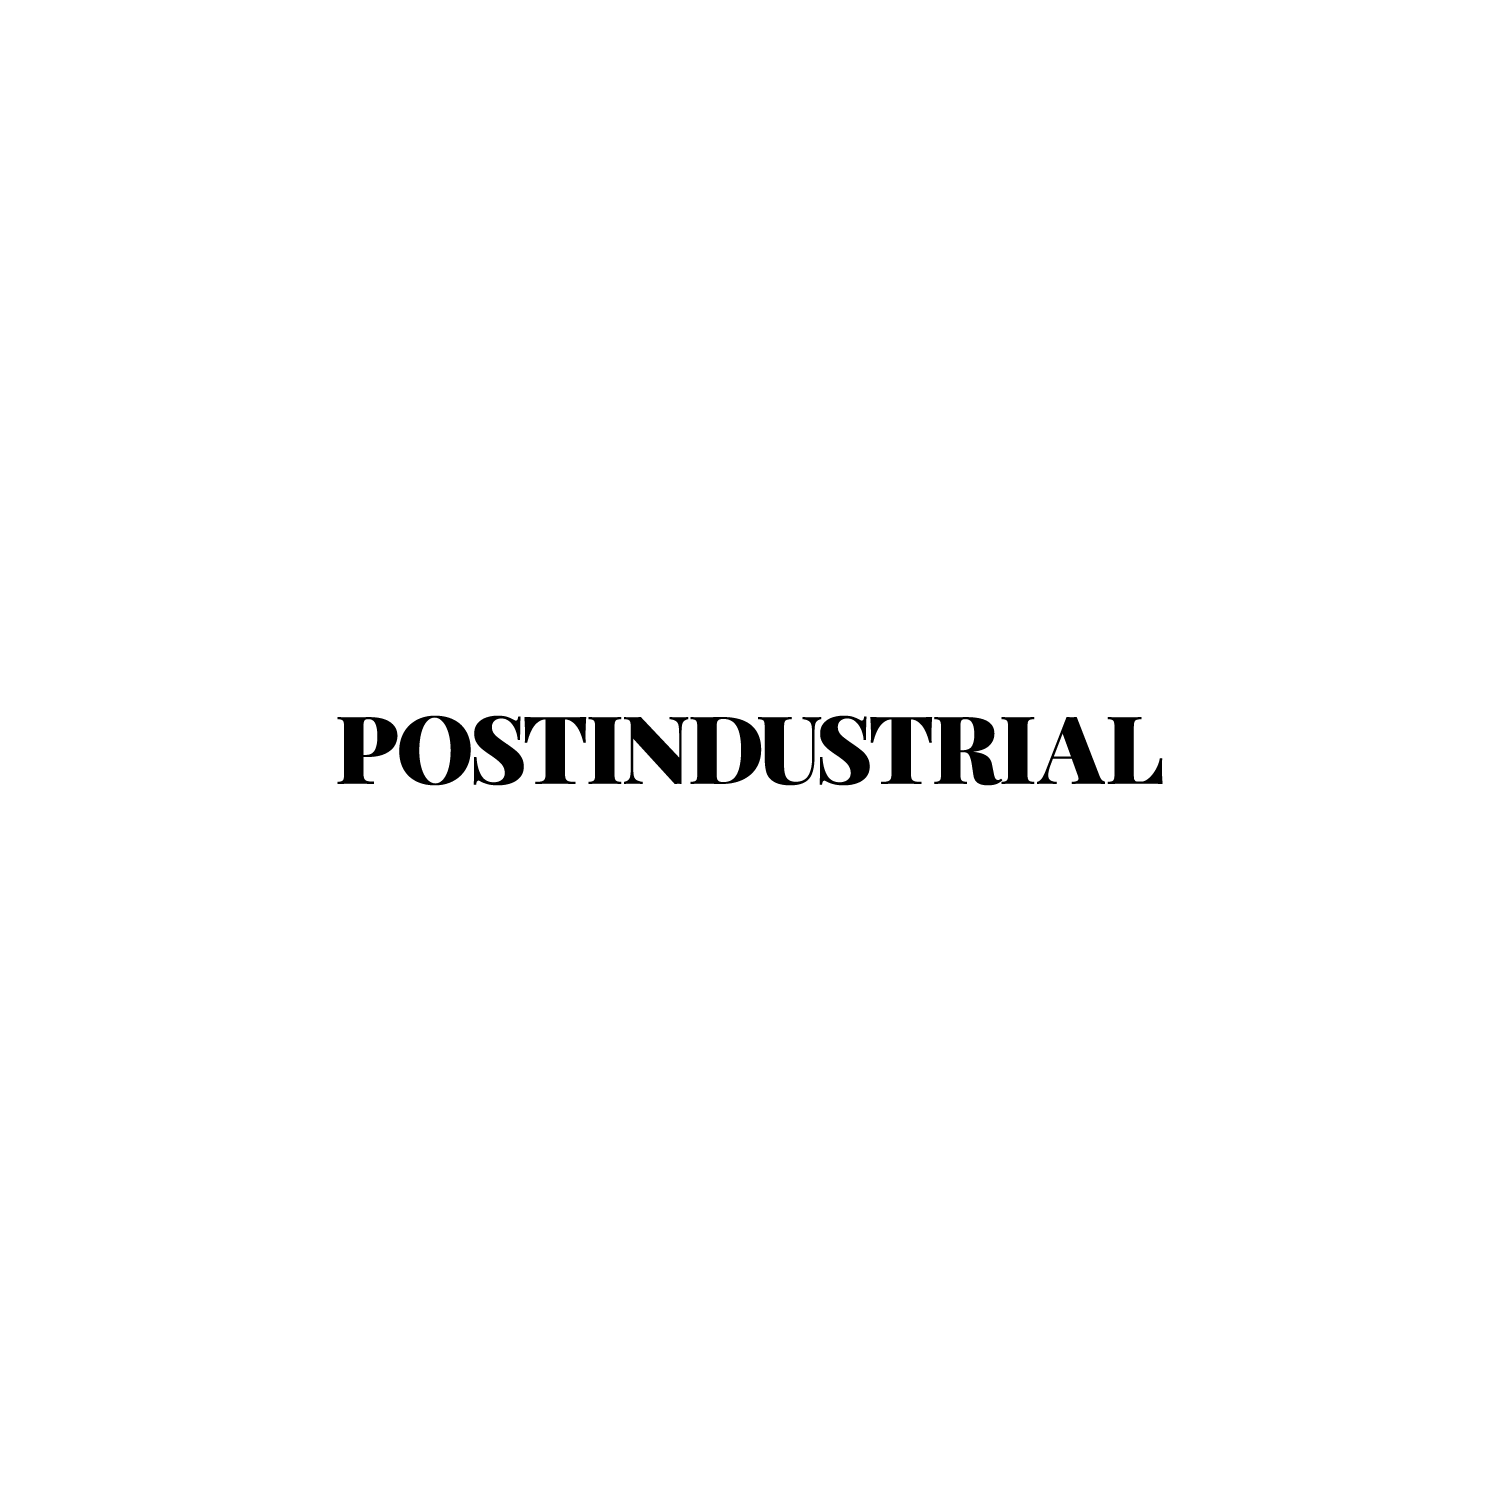 Postindustrial Magazine logo by OLSON MCINTYRE